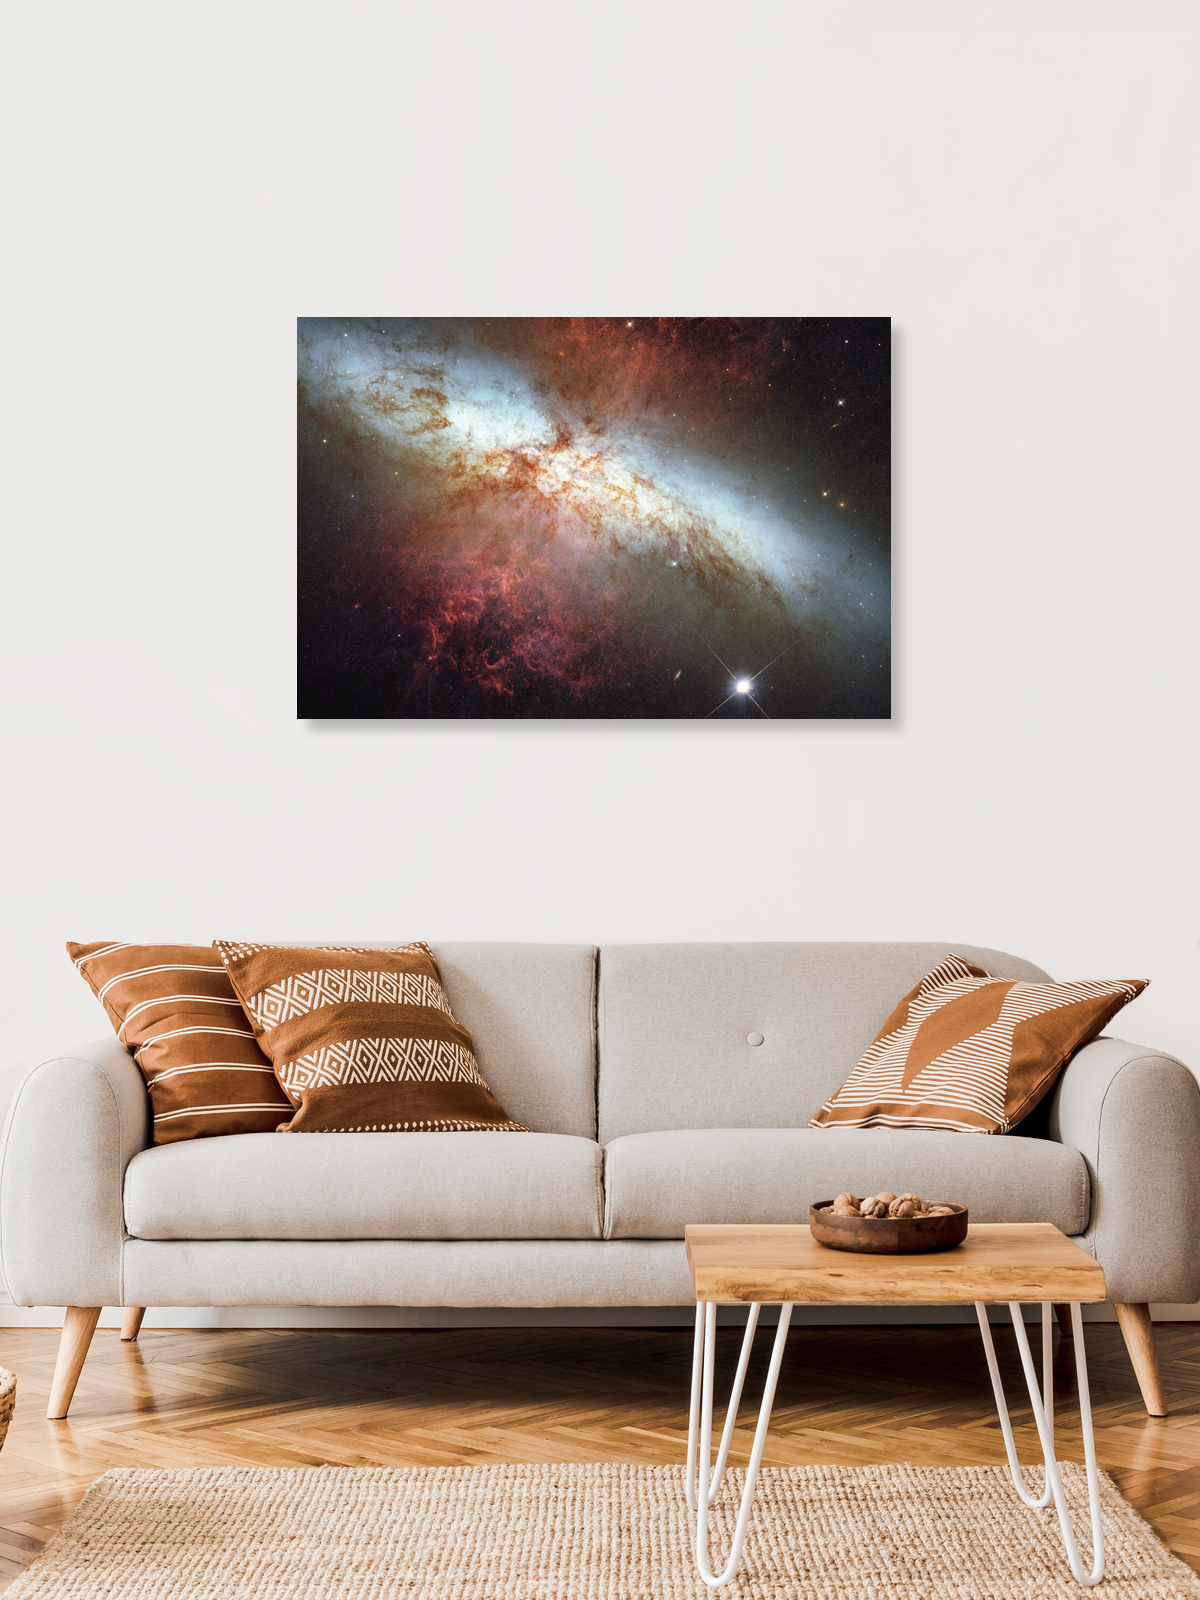 Galaxy Space Galaxy m82 Supernova Wall Art Poster Massive Format Wide Print 